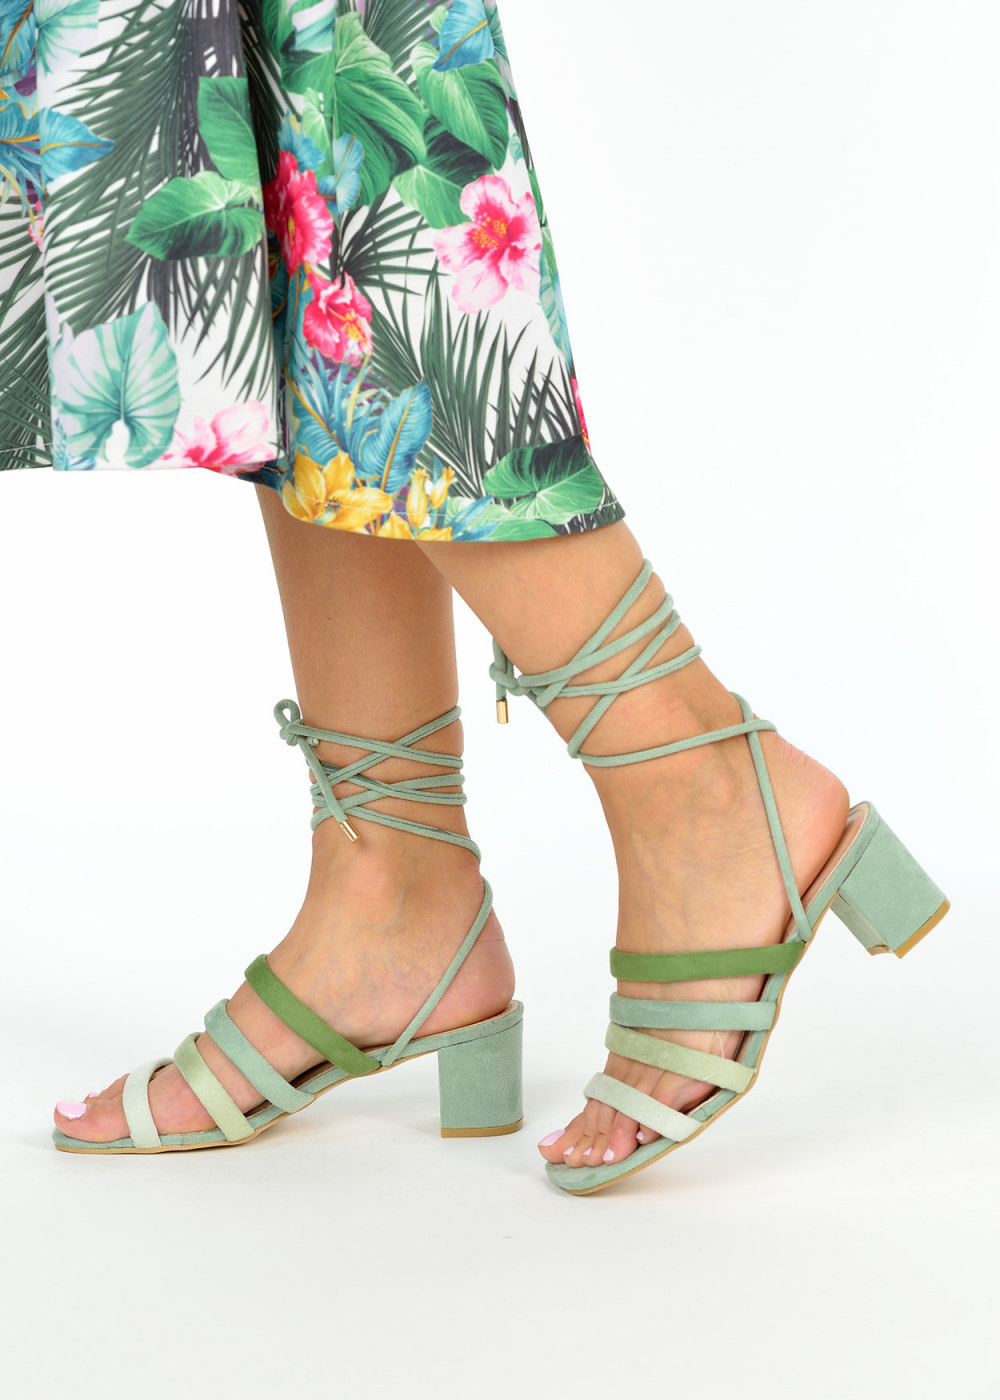 Green block heeled sandals 3